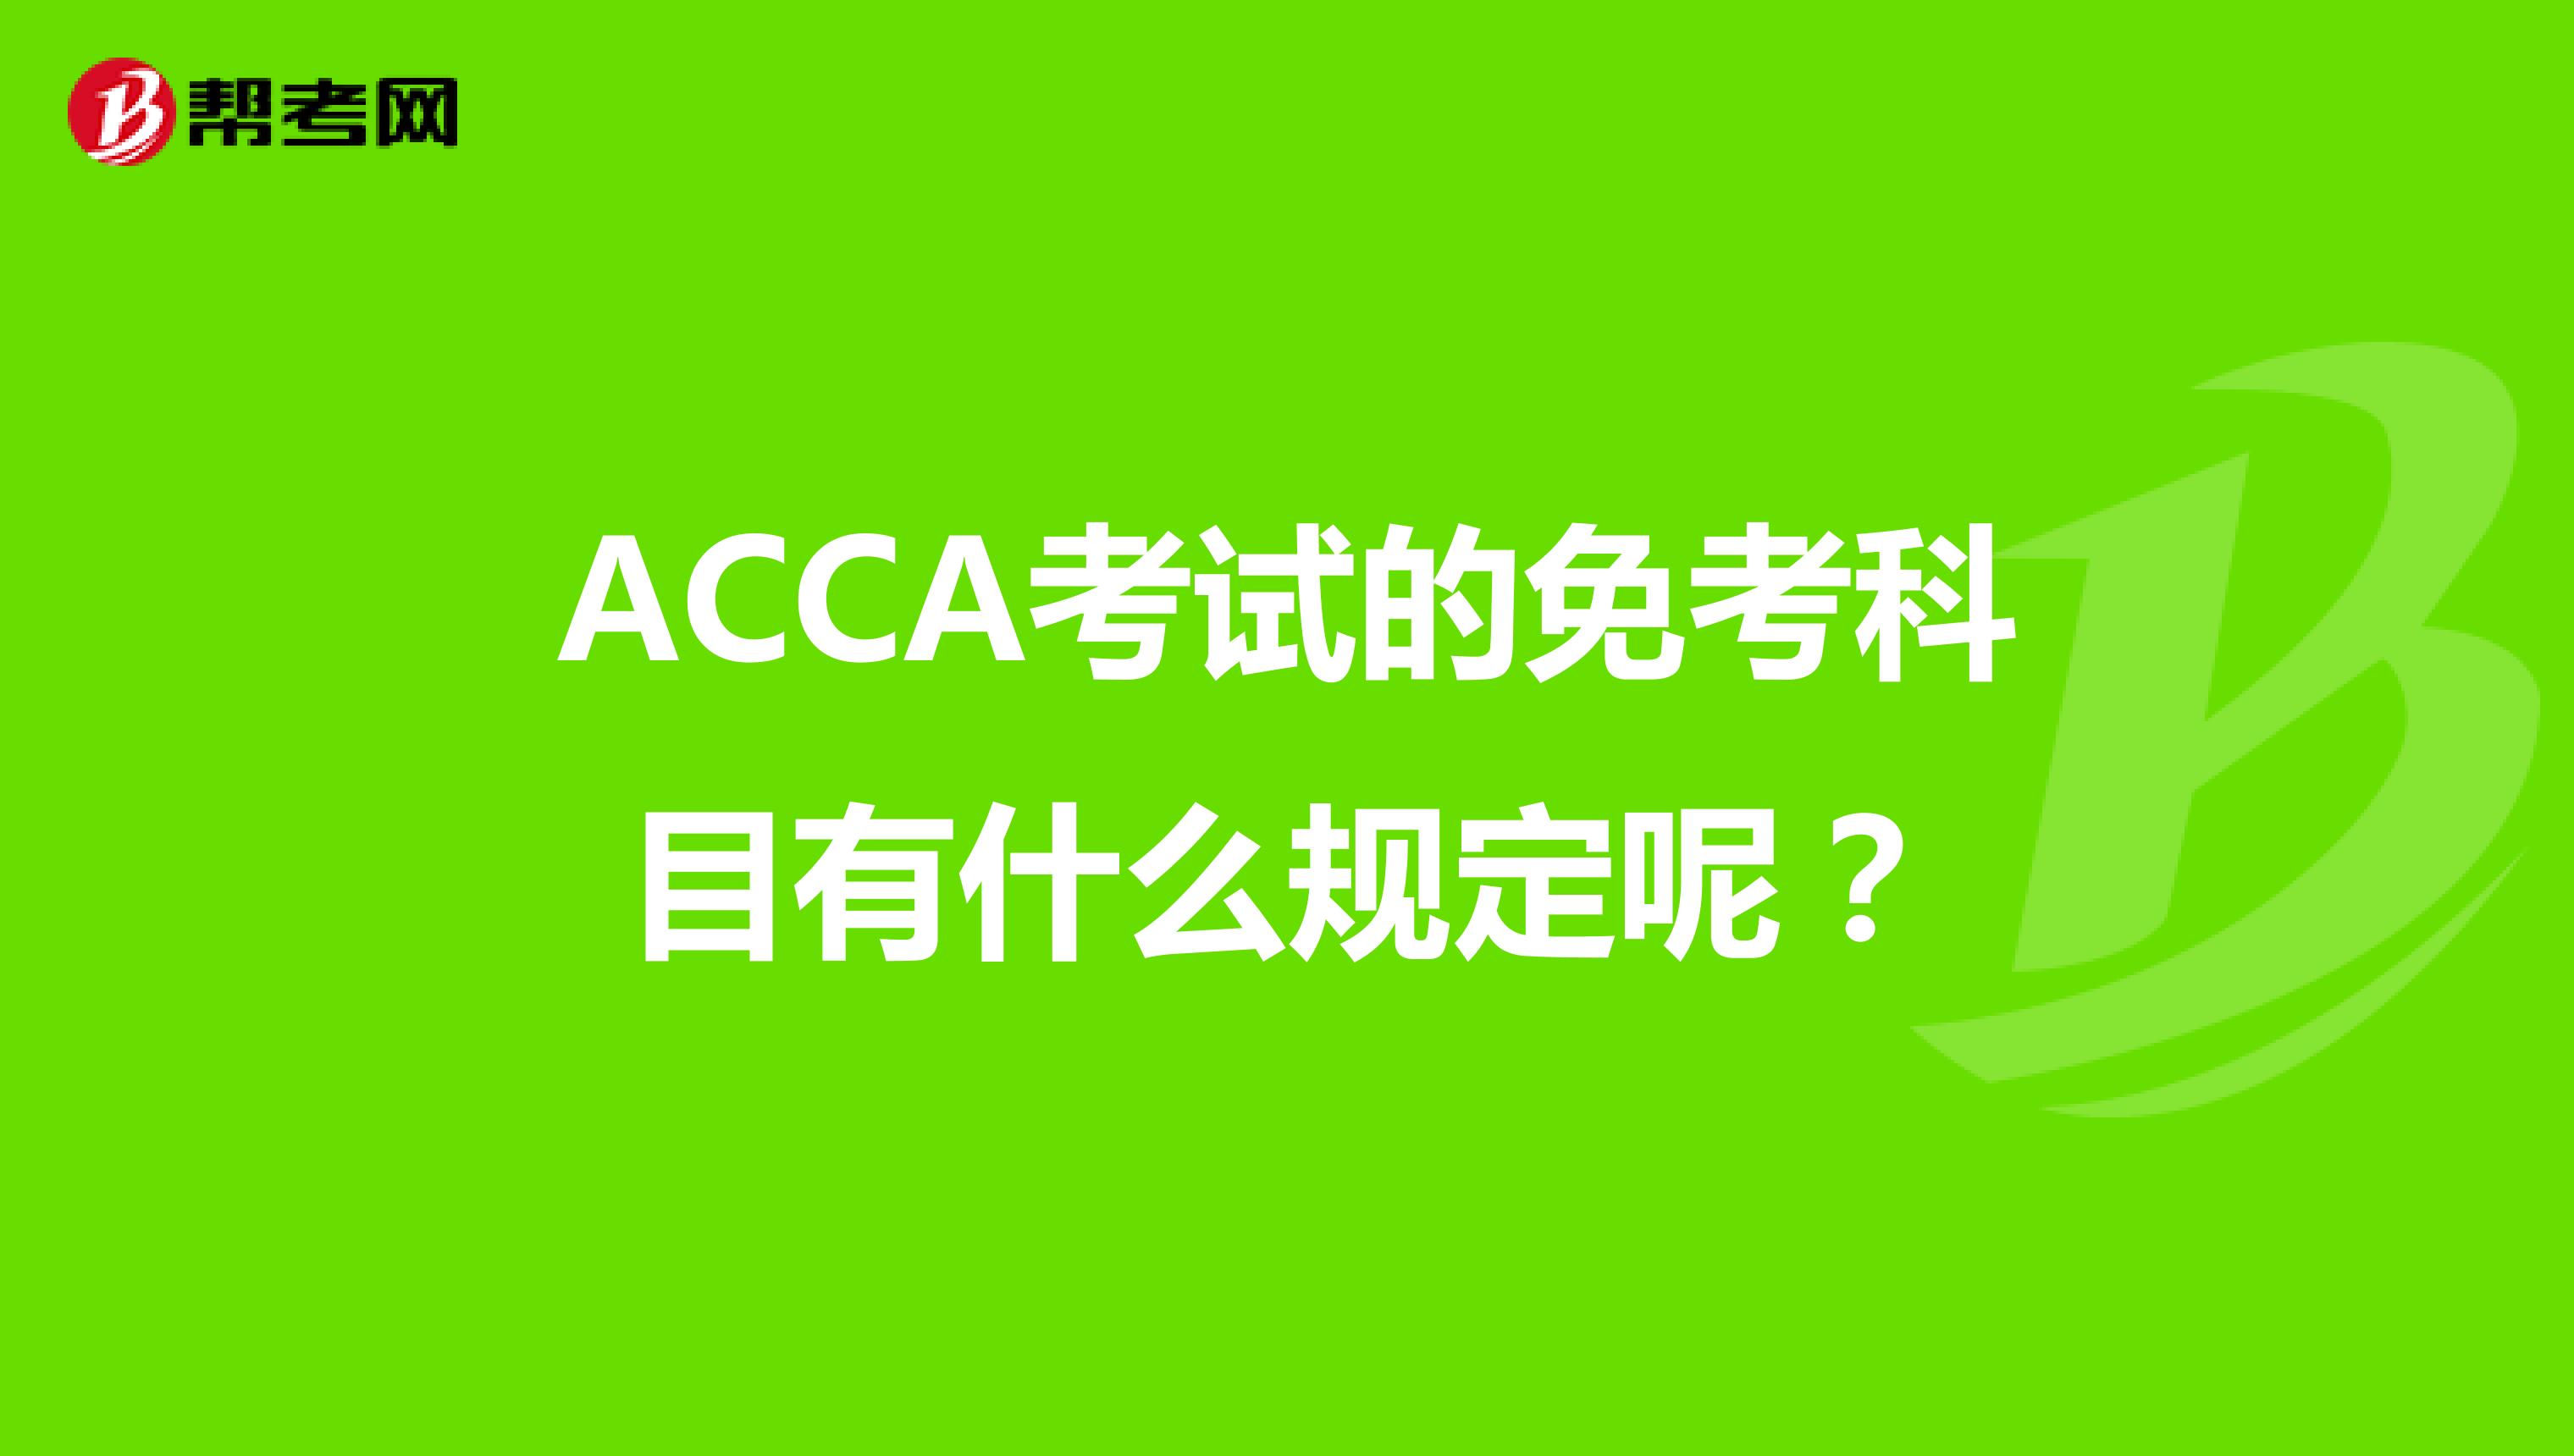 ACCA考试的免考科目有什么规定呢？